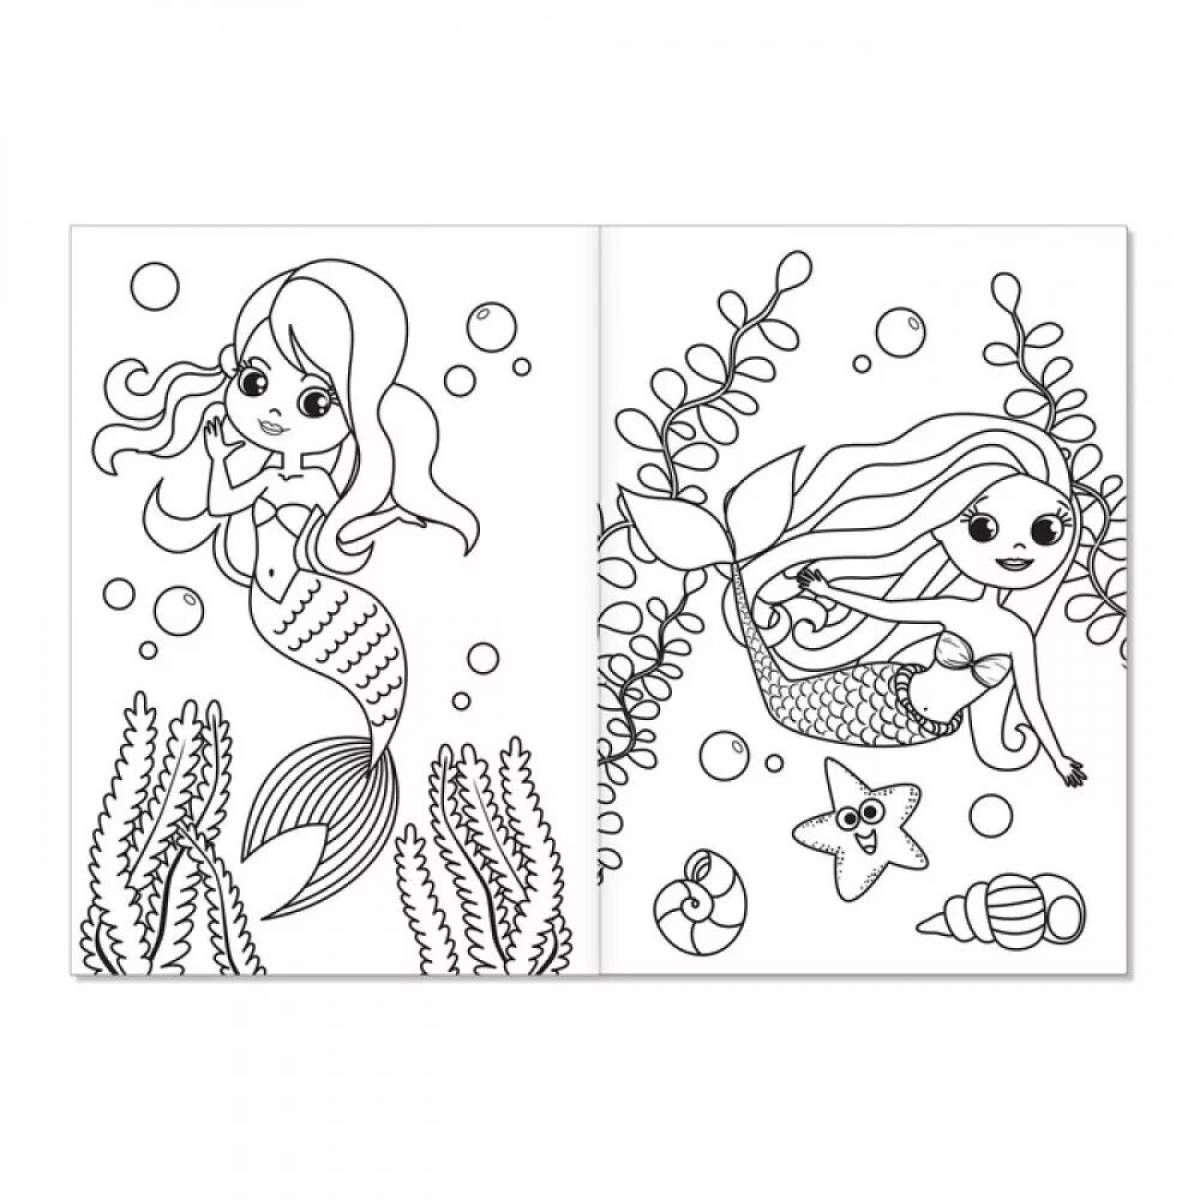 Mermaid games for girls #2